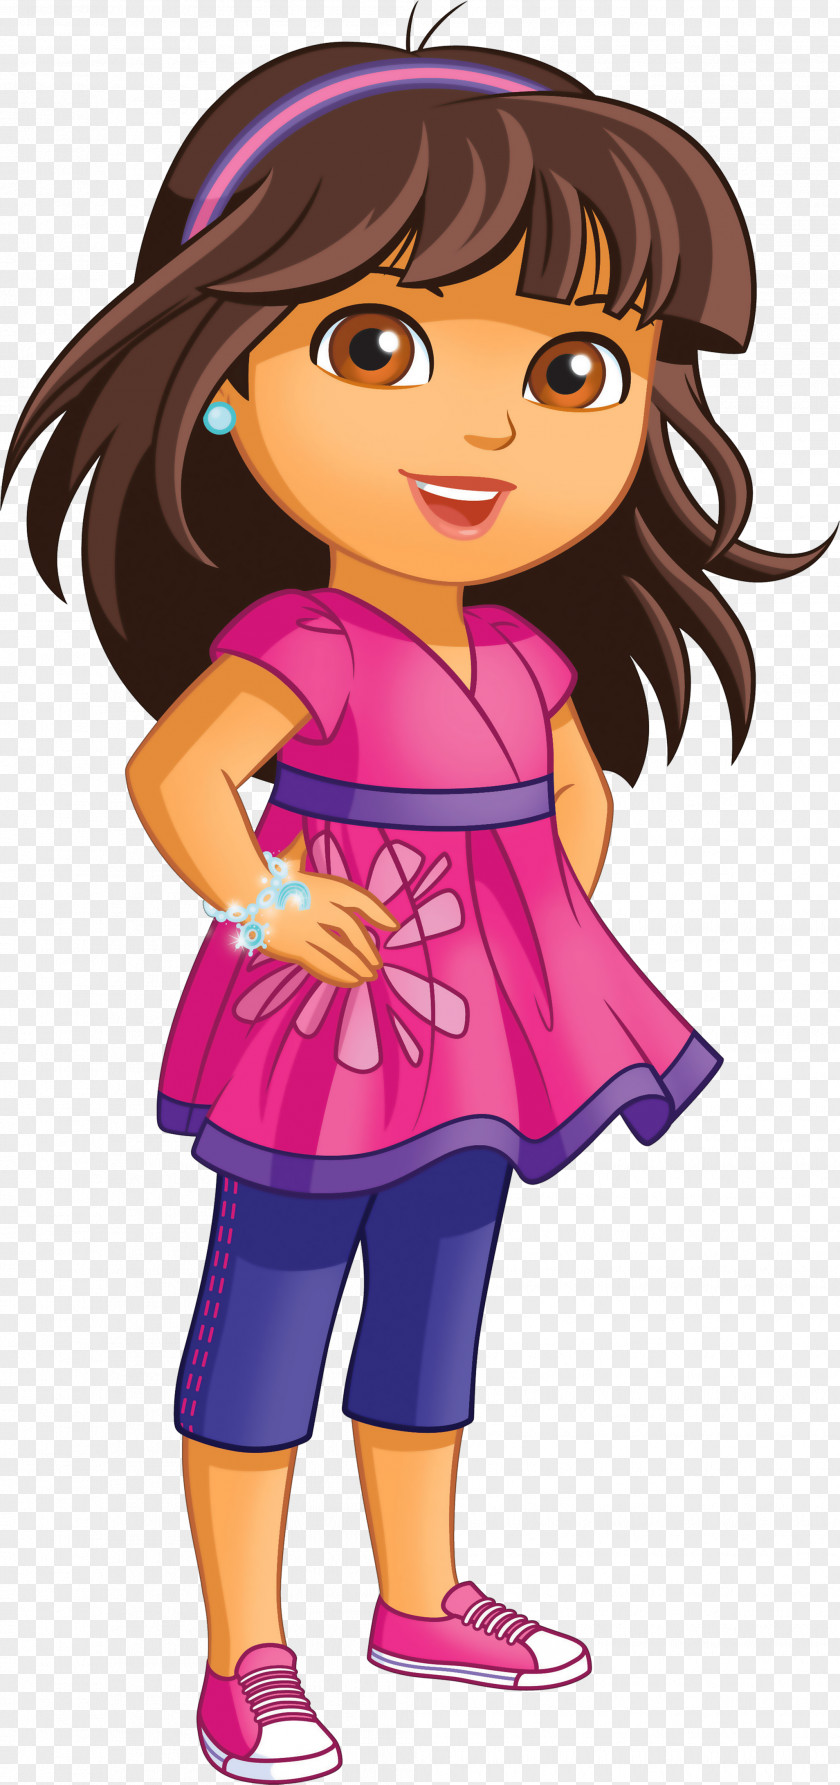 Cute Kid Fátima Ptacek Dora The Explorer Nickelodeon Image Clip Art PNG